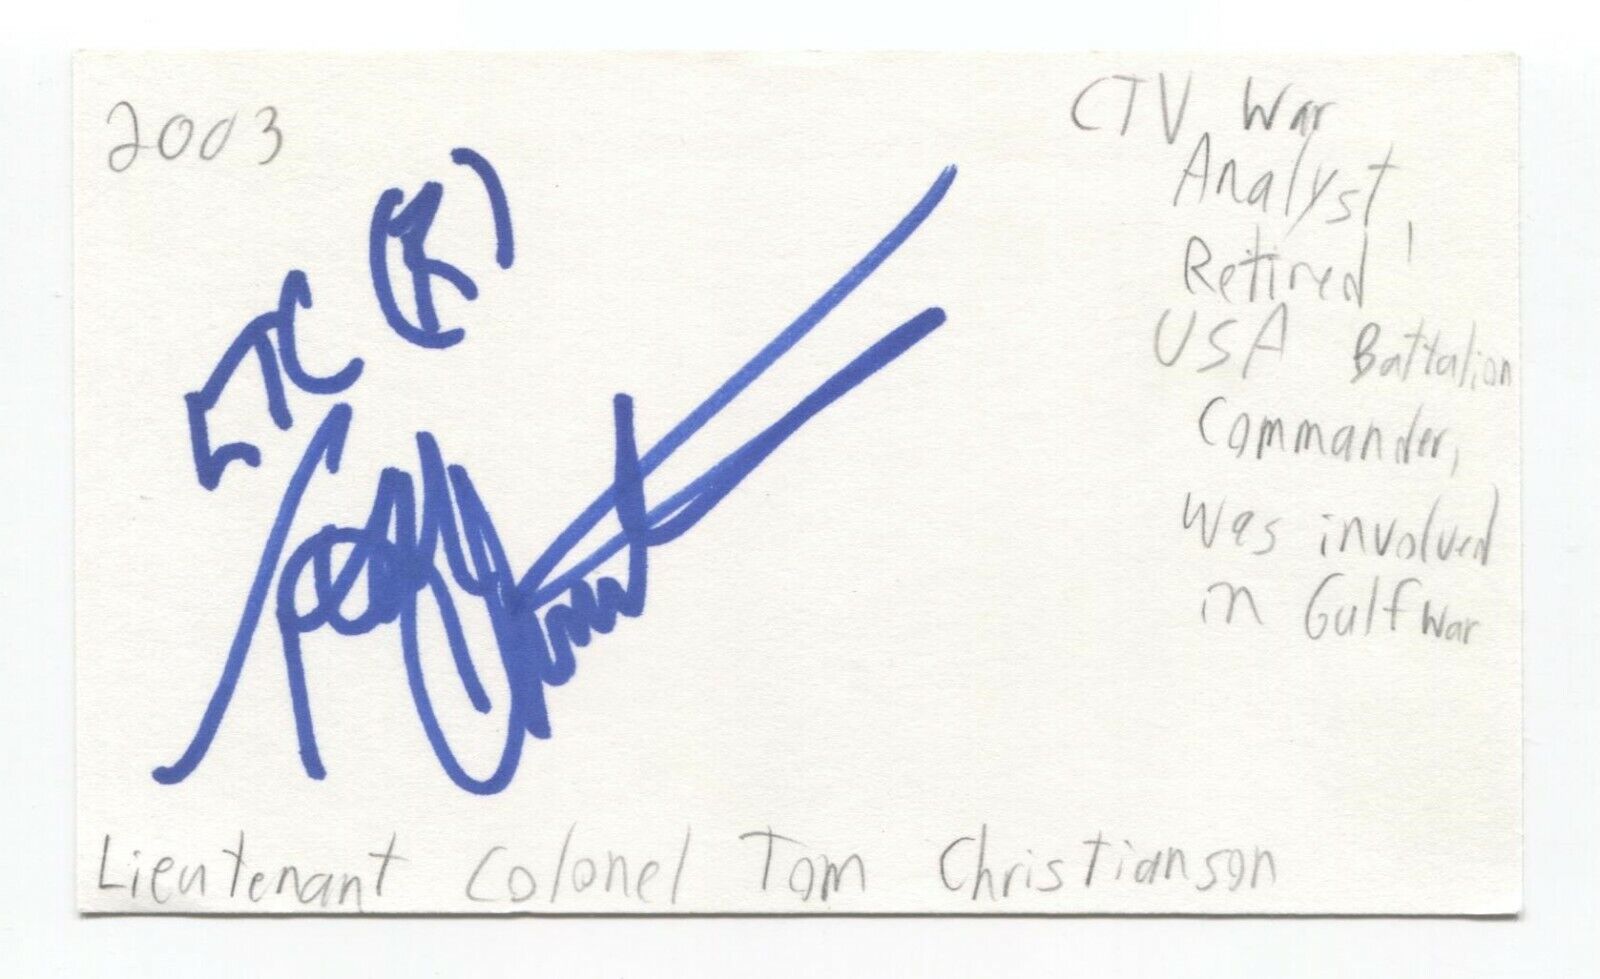 Lt Colonel Tom Christianson Signed 3x5 Index Card Autographed Signature